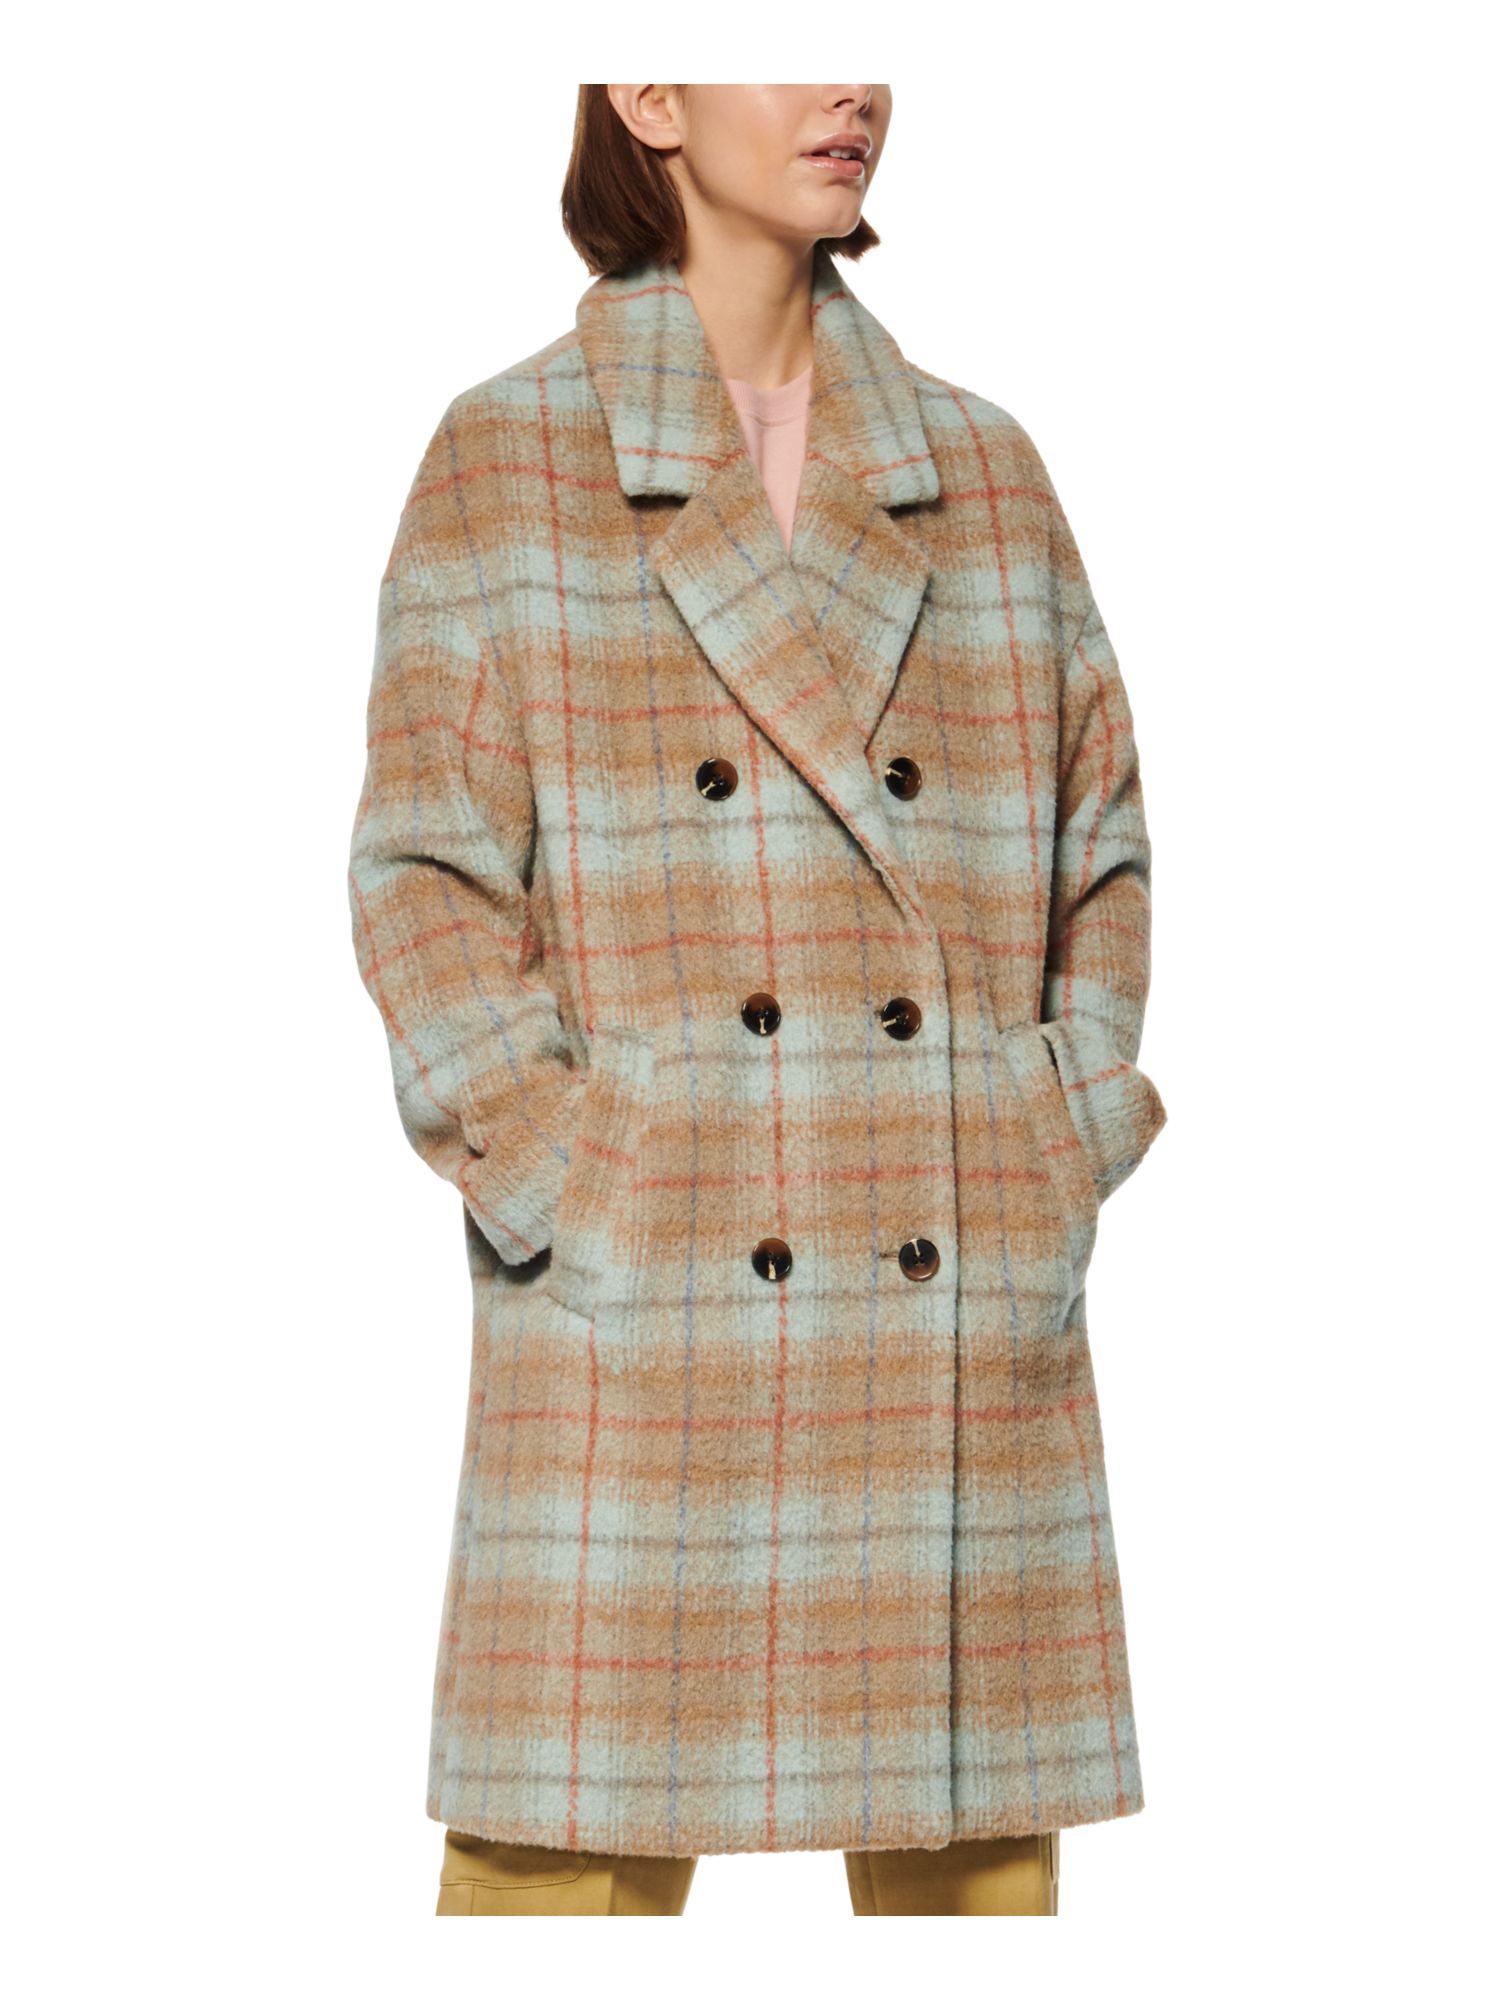 MARC NEW YORK Womens Beige Pocketed Plaid Evening Winter Jacket Coat XL